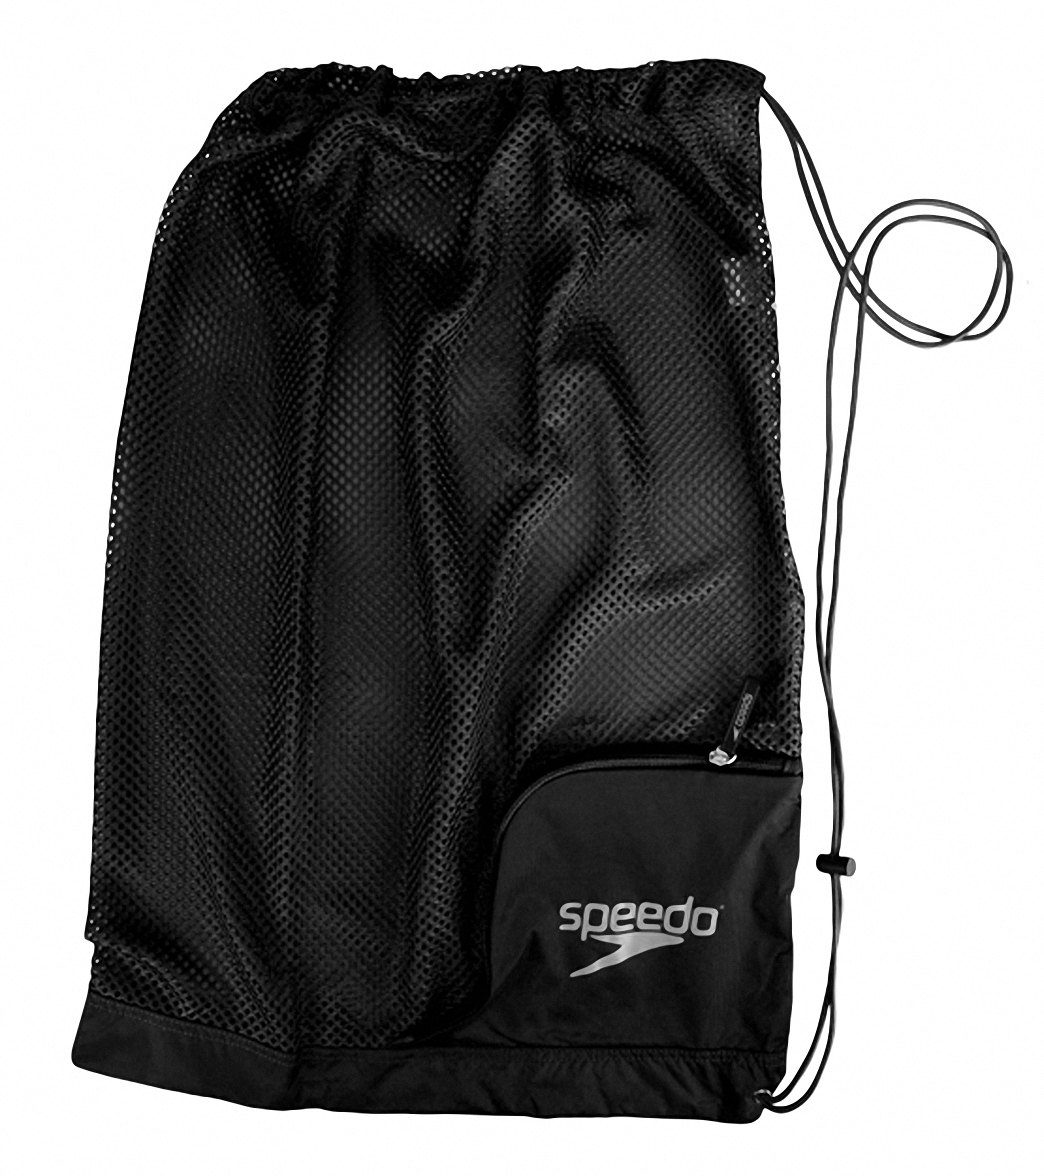 Speedo Ventilator Mesh Bag - Black - Swimoutlet.com